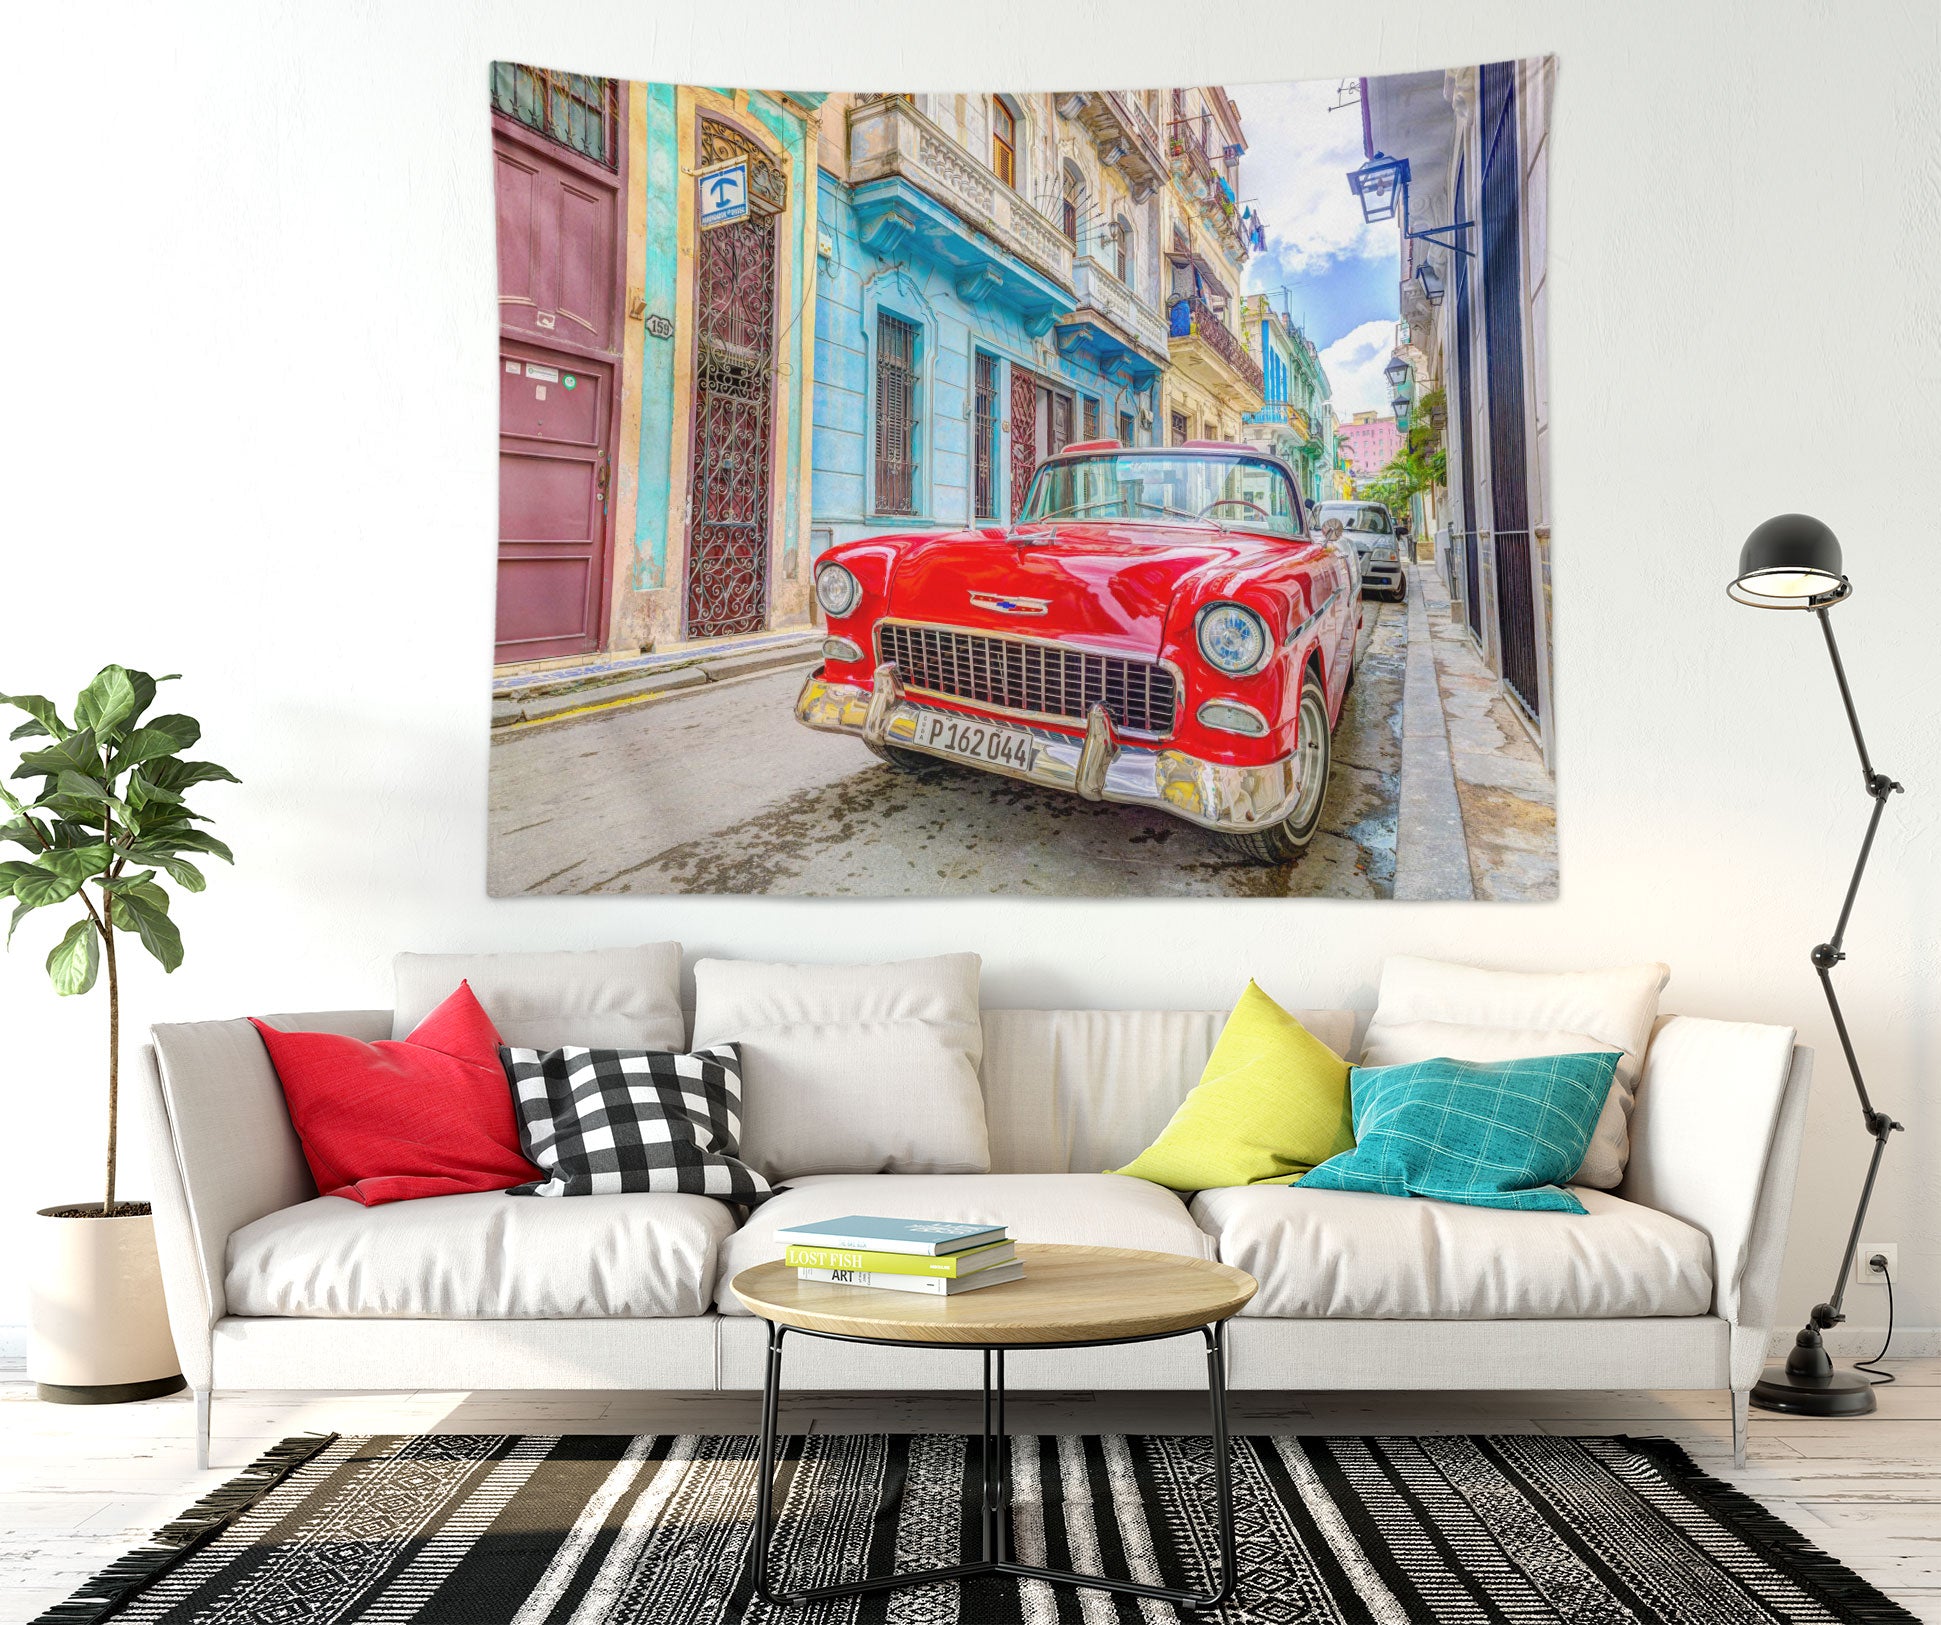 3D Alley Red Car 112183 Assaf Frank Tapestry Hanging Cloth Hang